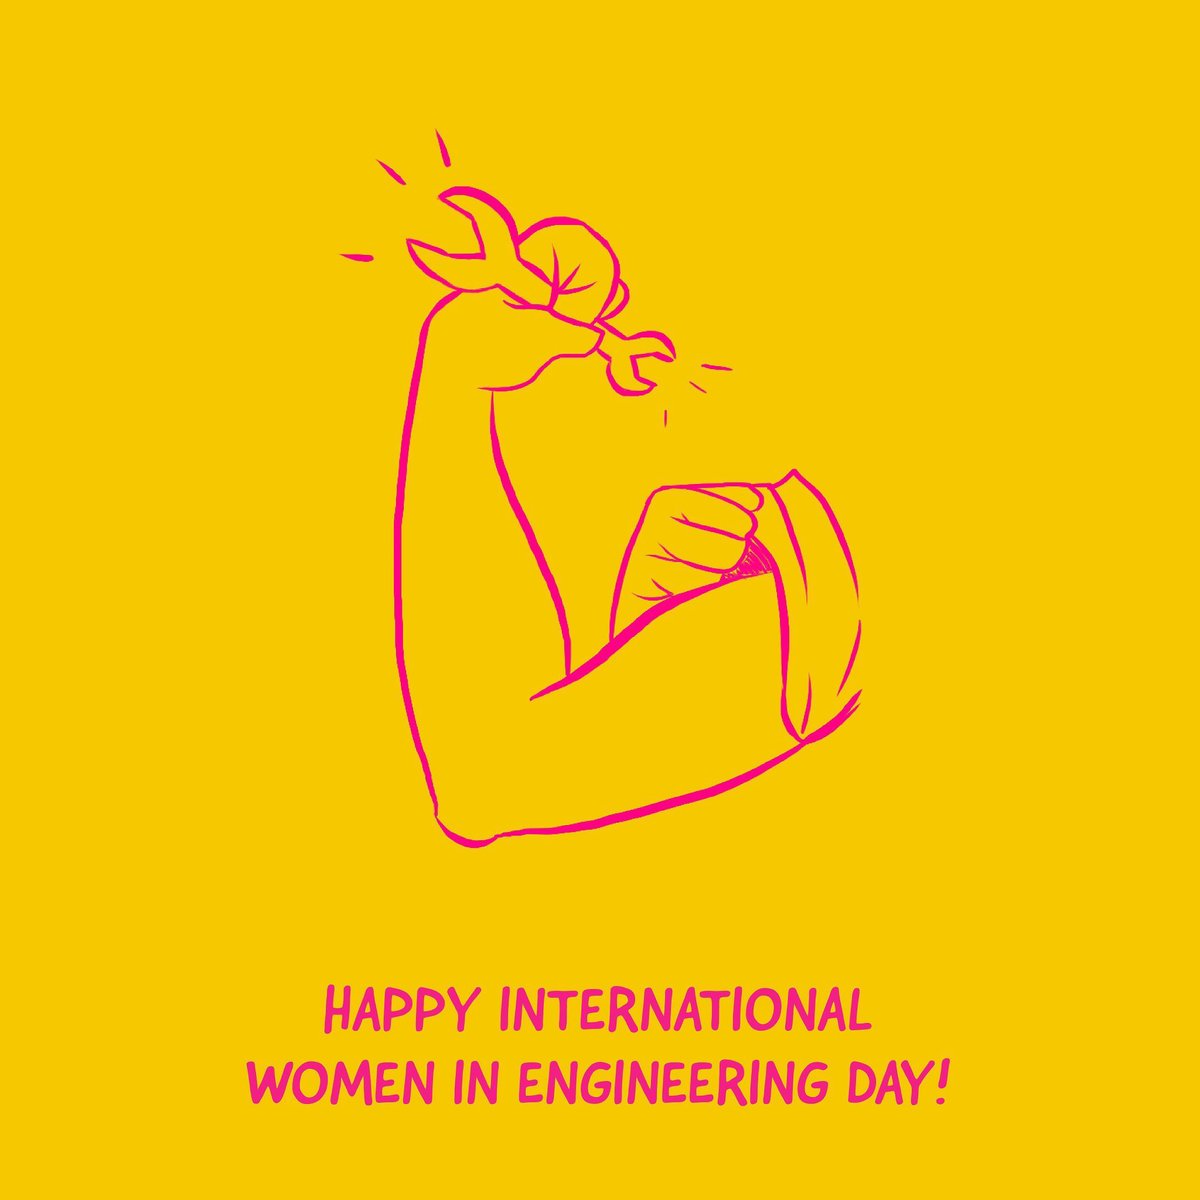 Proud of every current and future female engineers 👷🏻‍♀️❤️
#internationalwomeninengineeringday 
#اليوم_العالمي_للمهندسات